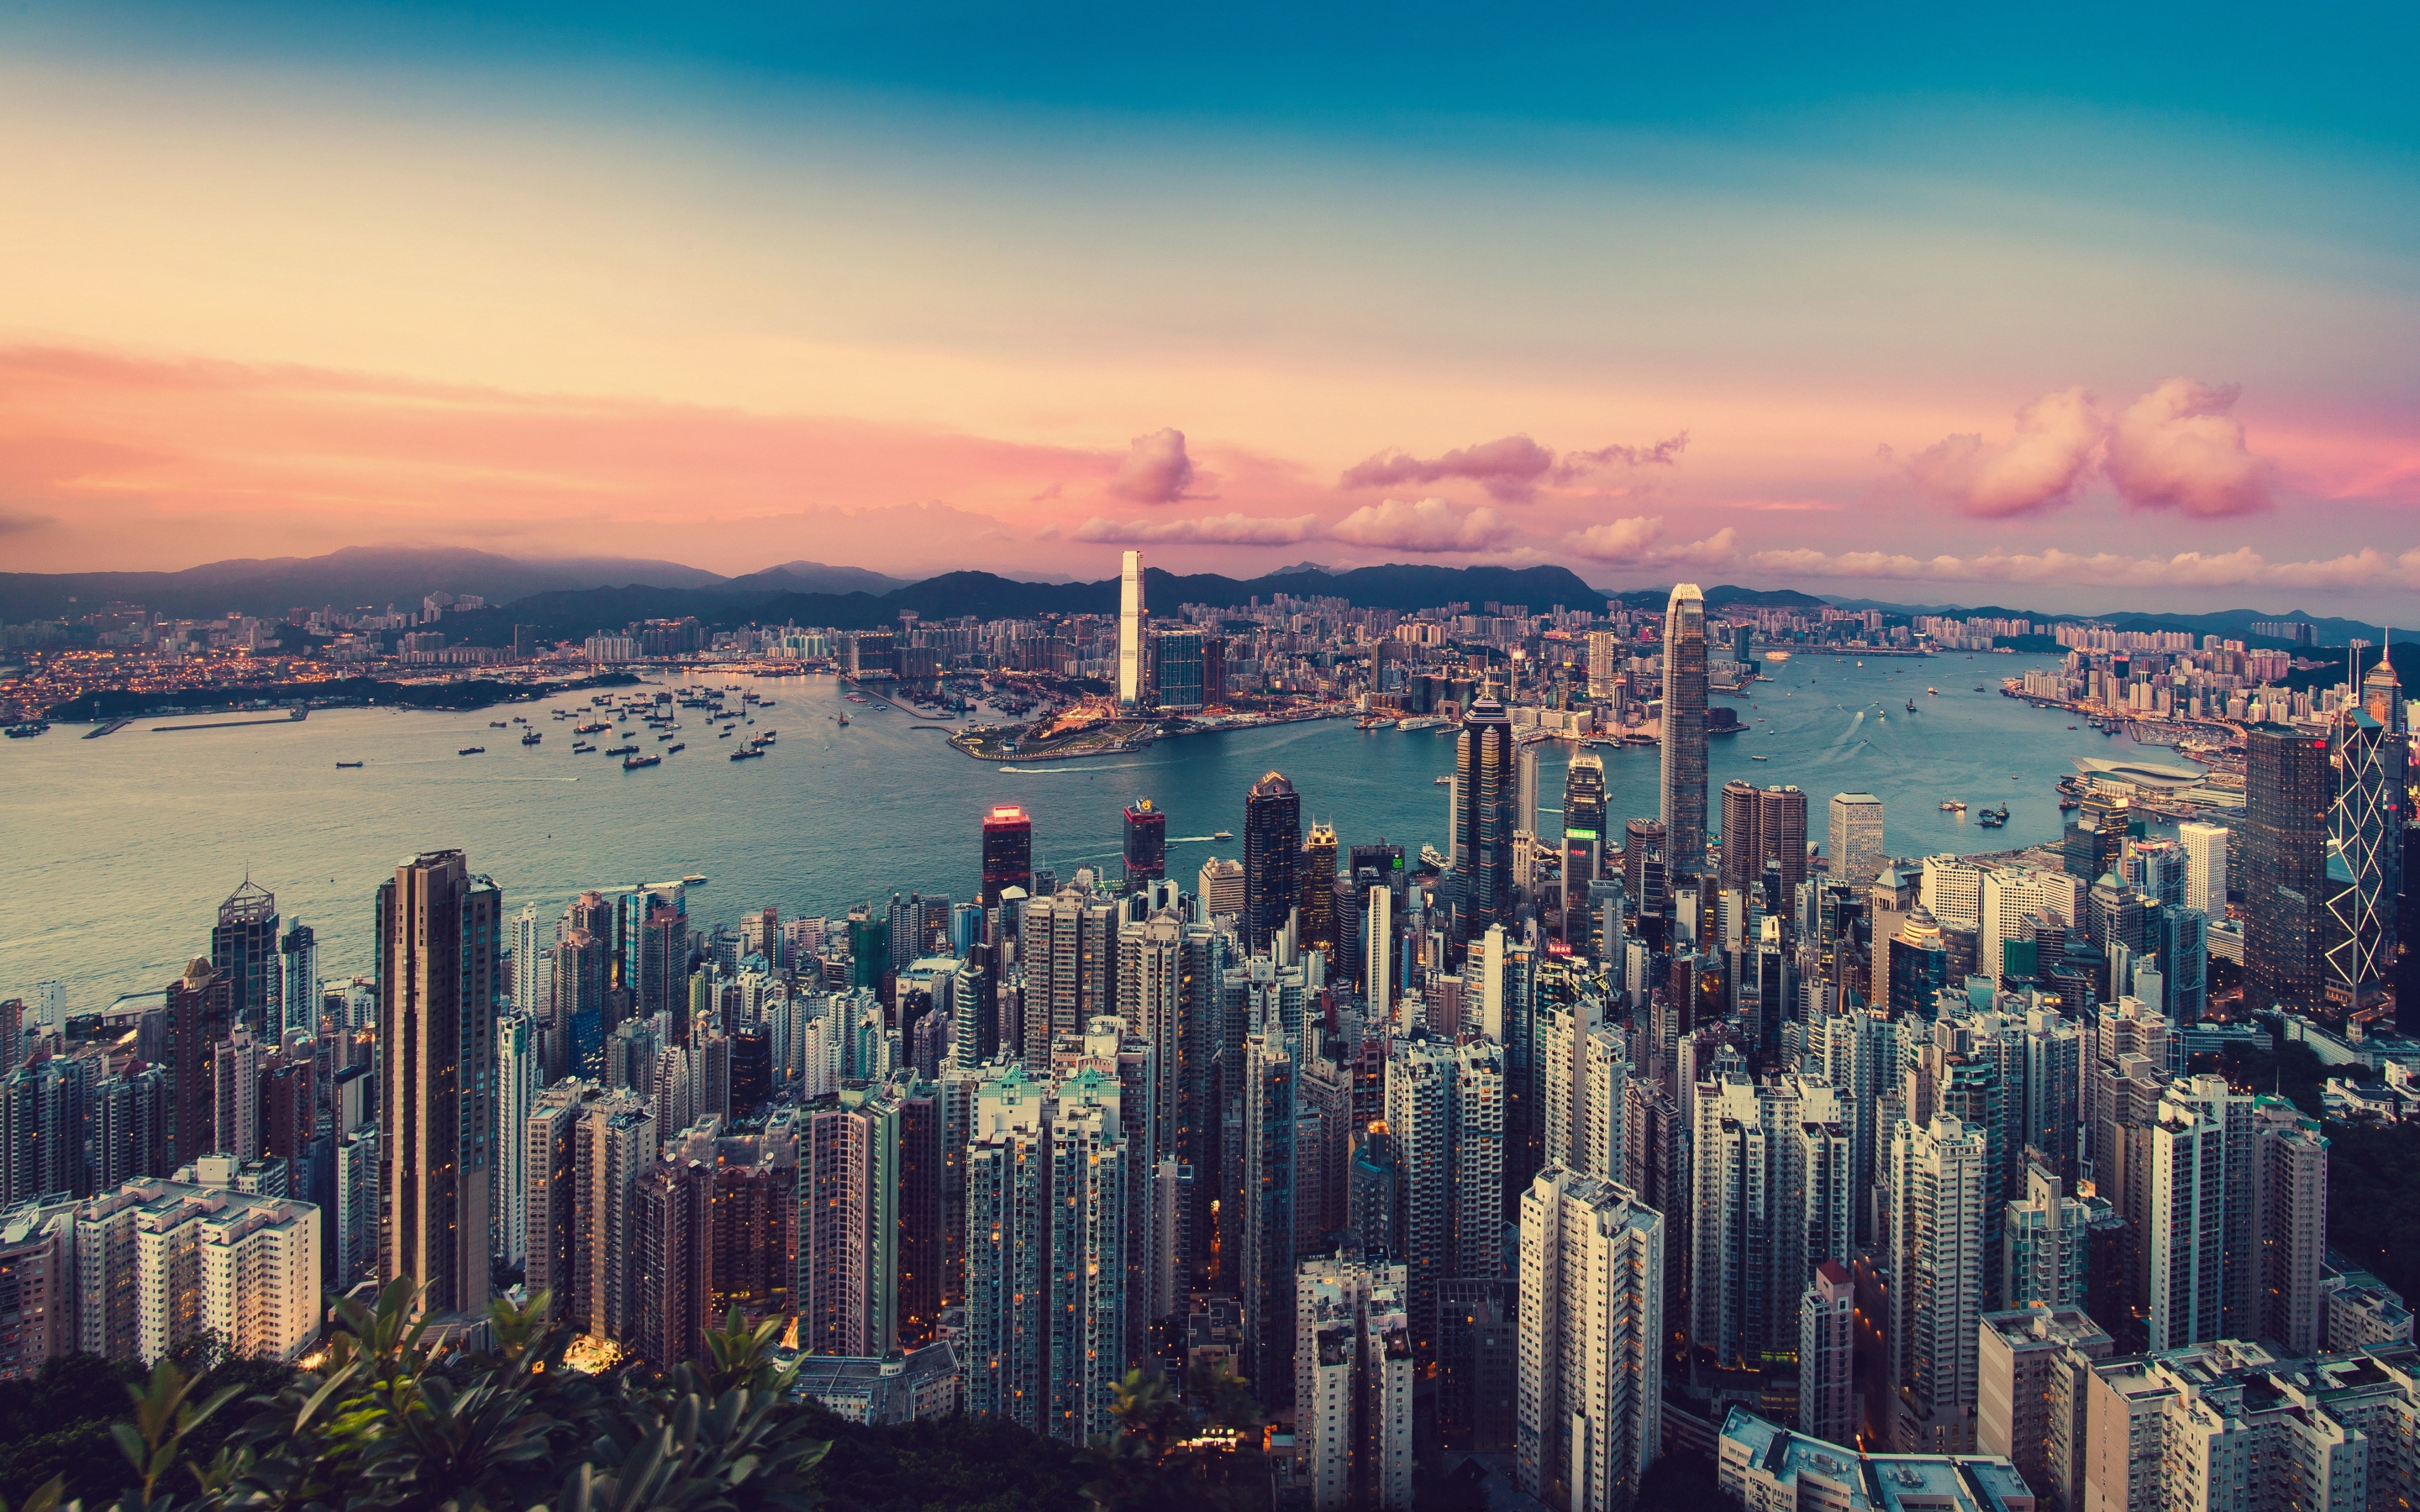 2880x1800 Hong Kong 8k Macbook Pro Retina Wallpaper Hd City 4k Wallpapers Images Photos And Background